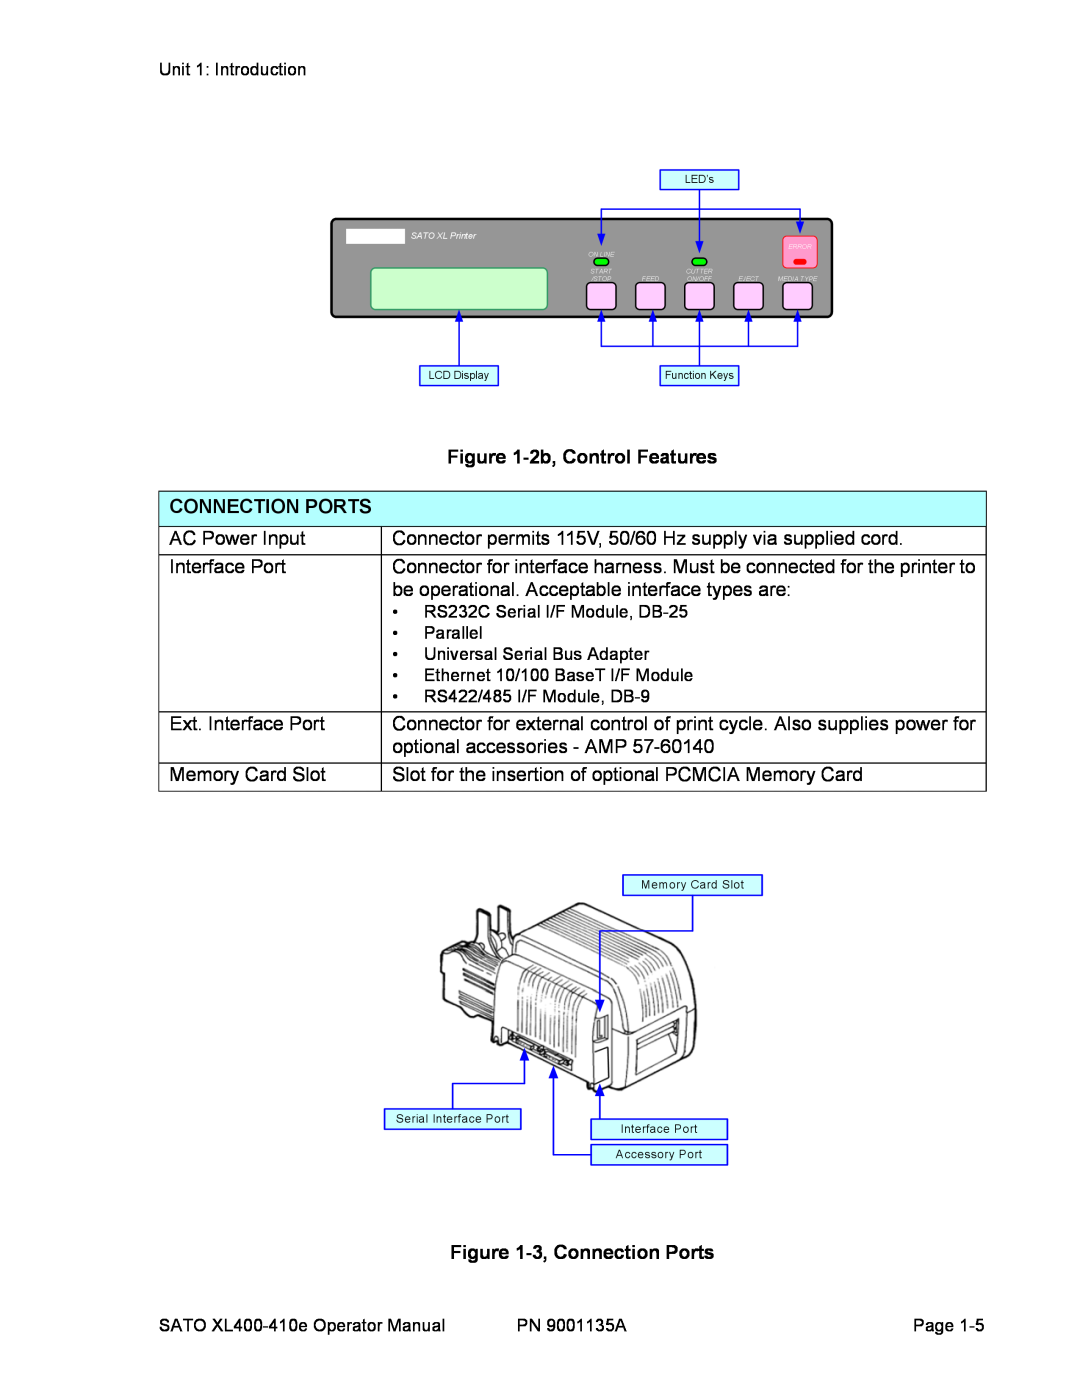 SATO 400e, 410e manual 2b, Control Features, 3, Connection Ports 